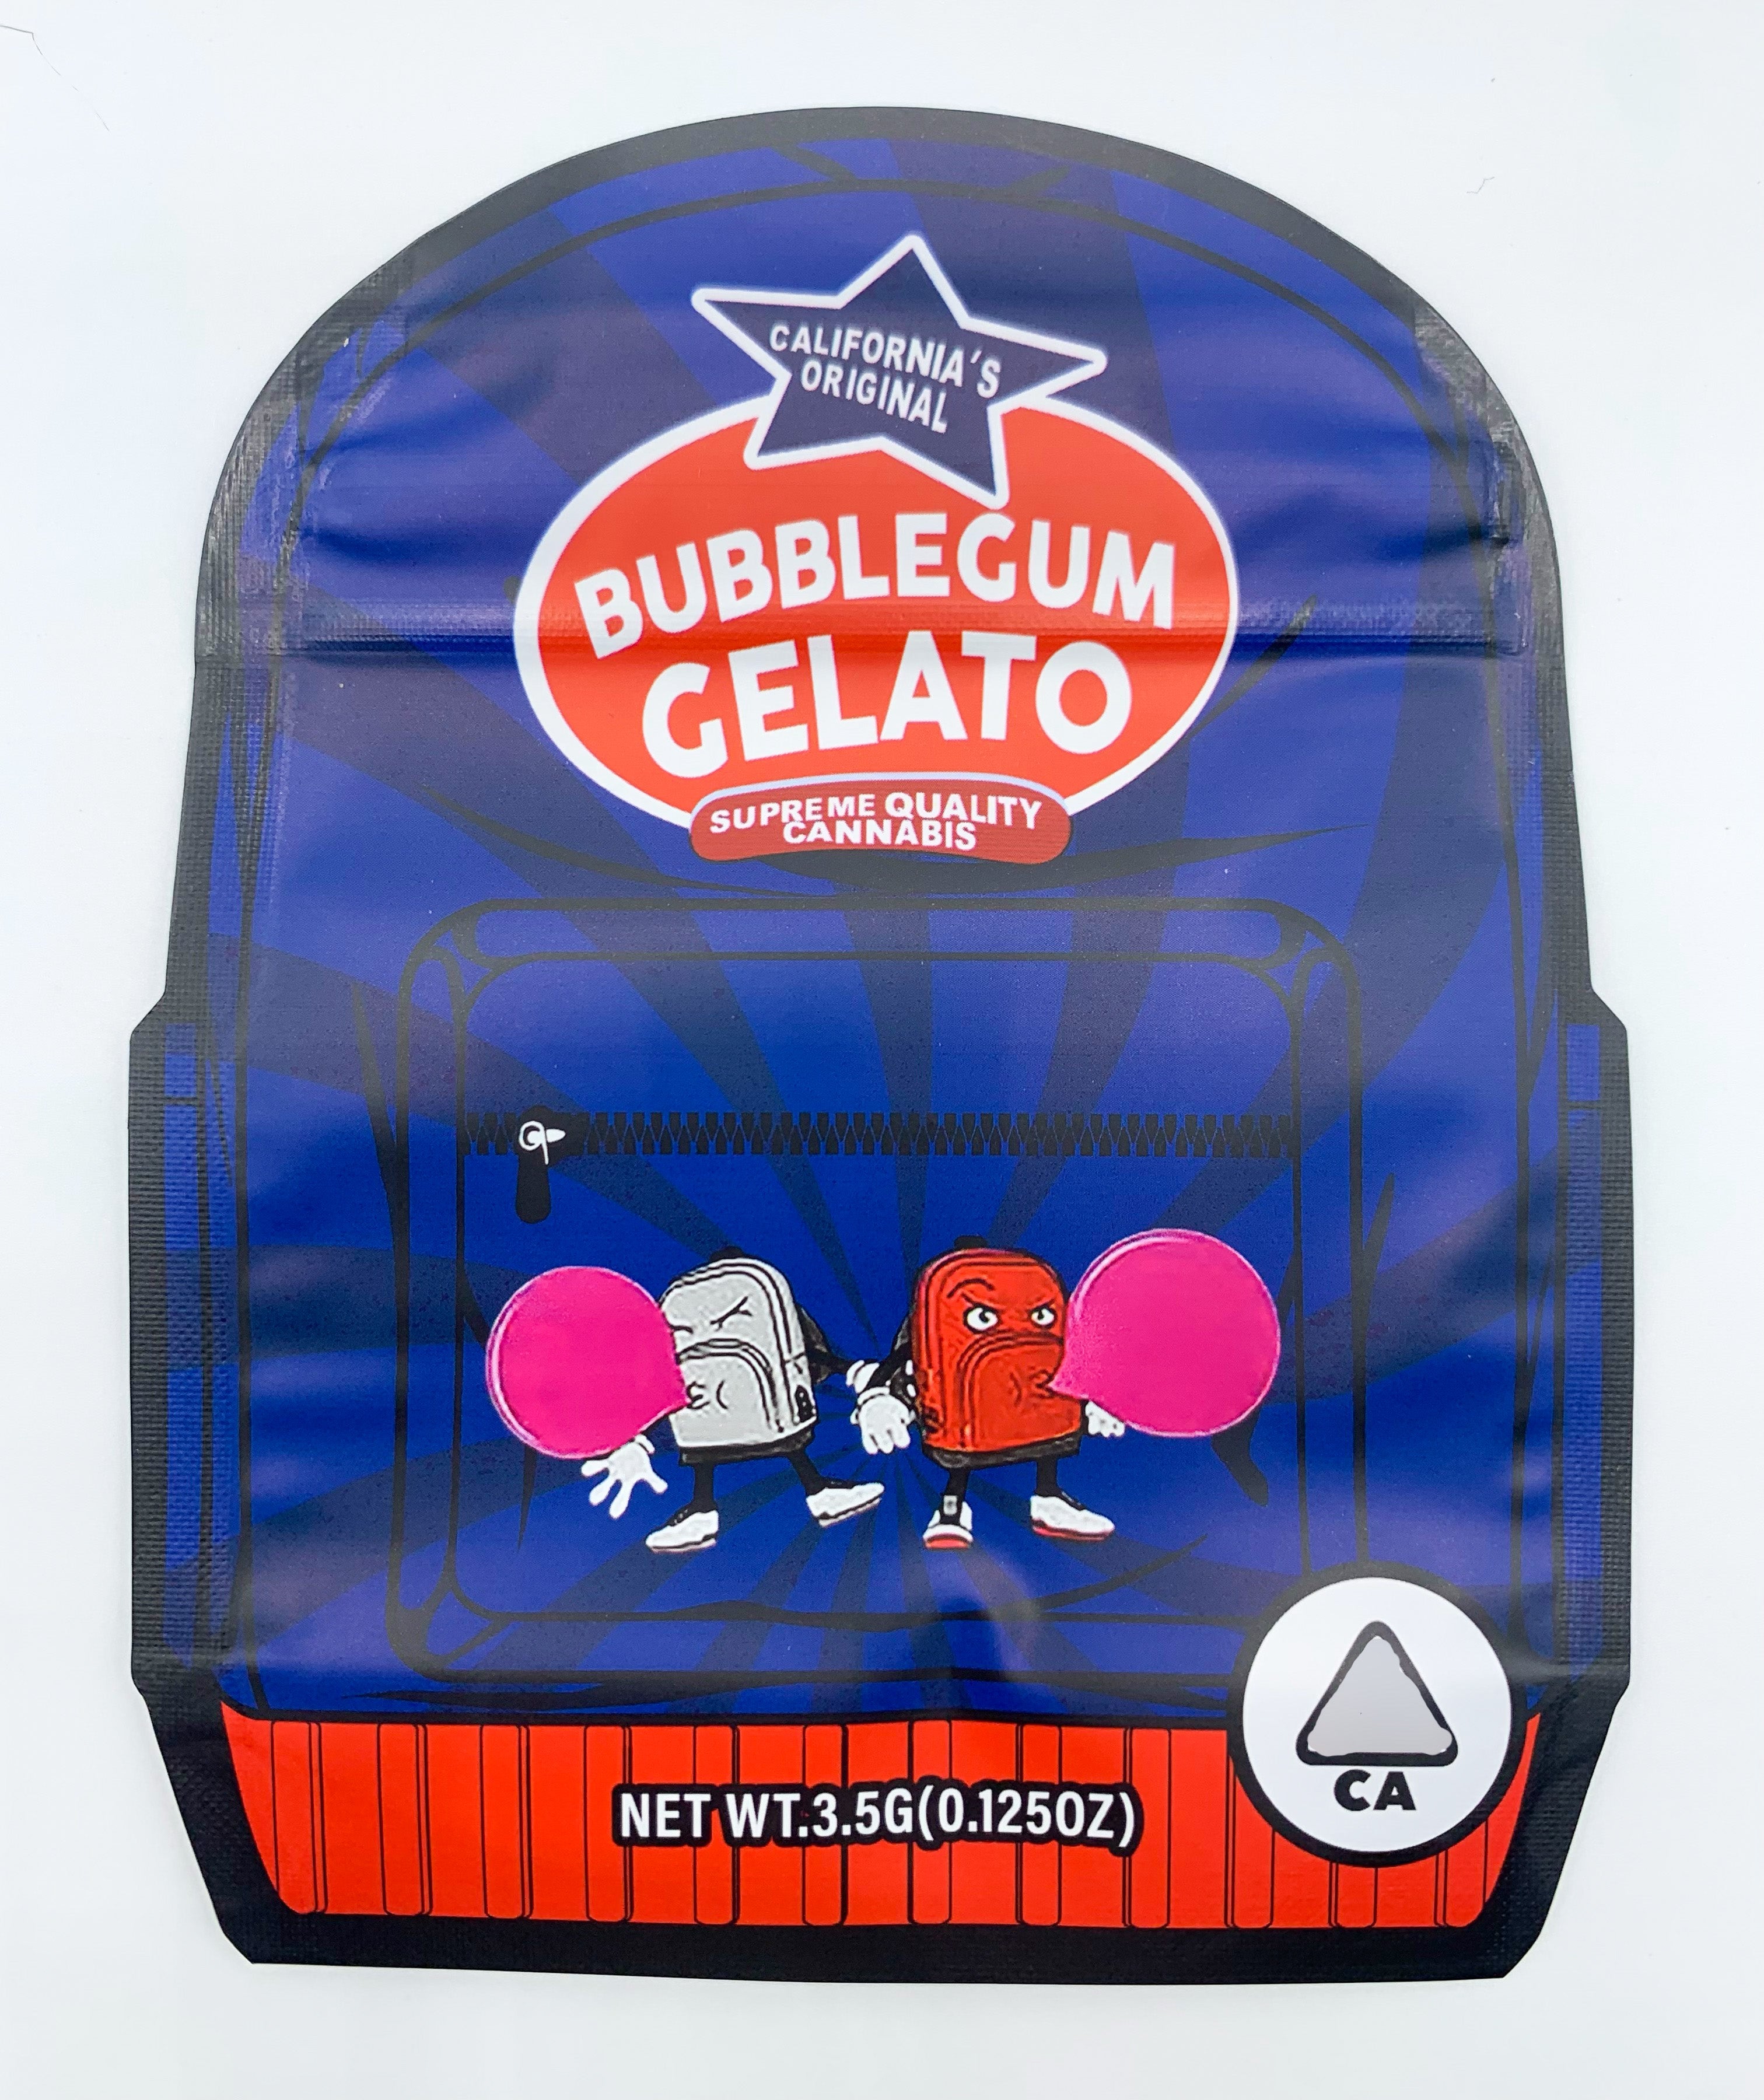 3D Backpackboyz Bubblegum Gelato 3.5g Mylar Bags